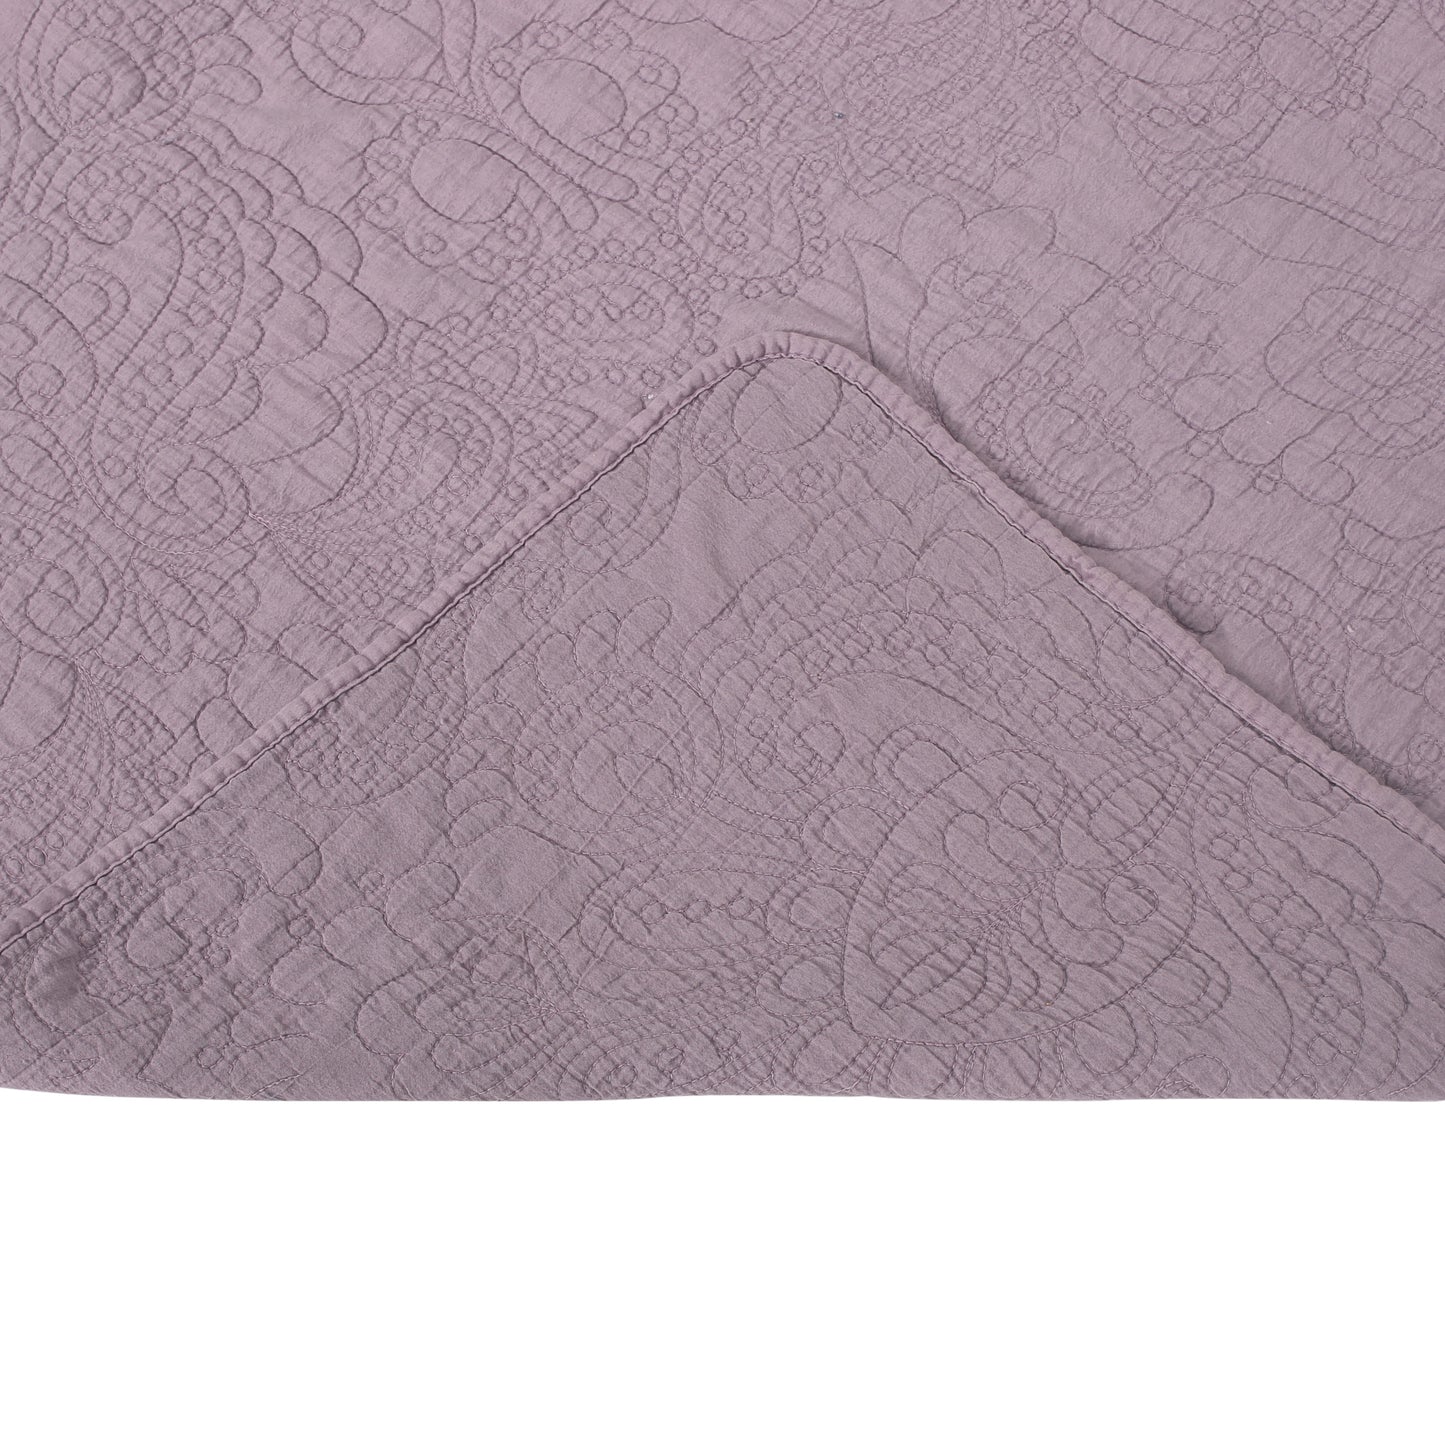 Anasophia Embroidered Throw Blanket